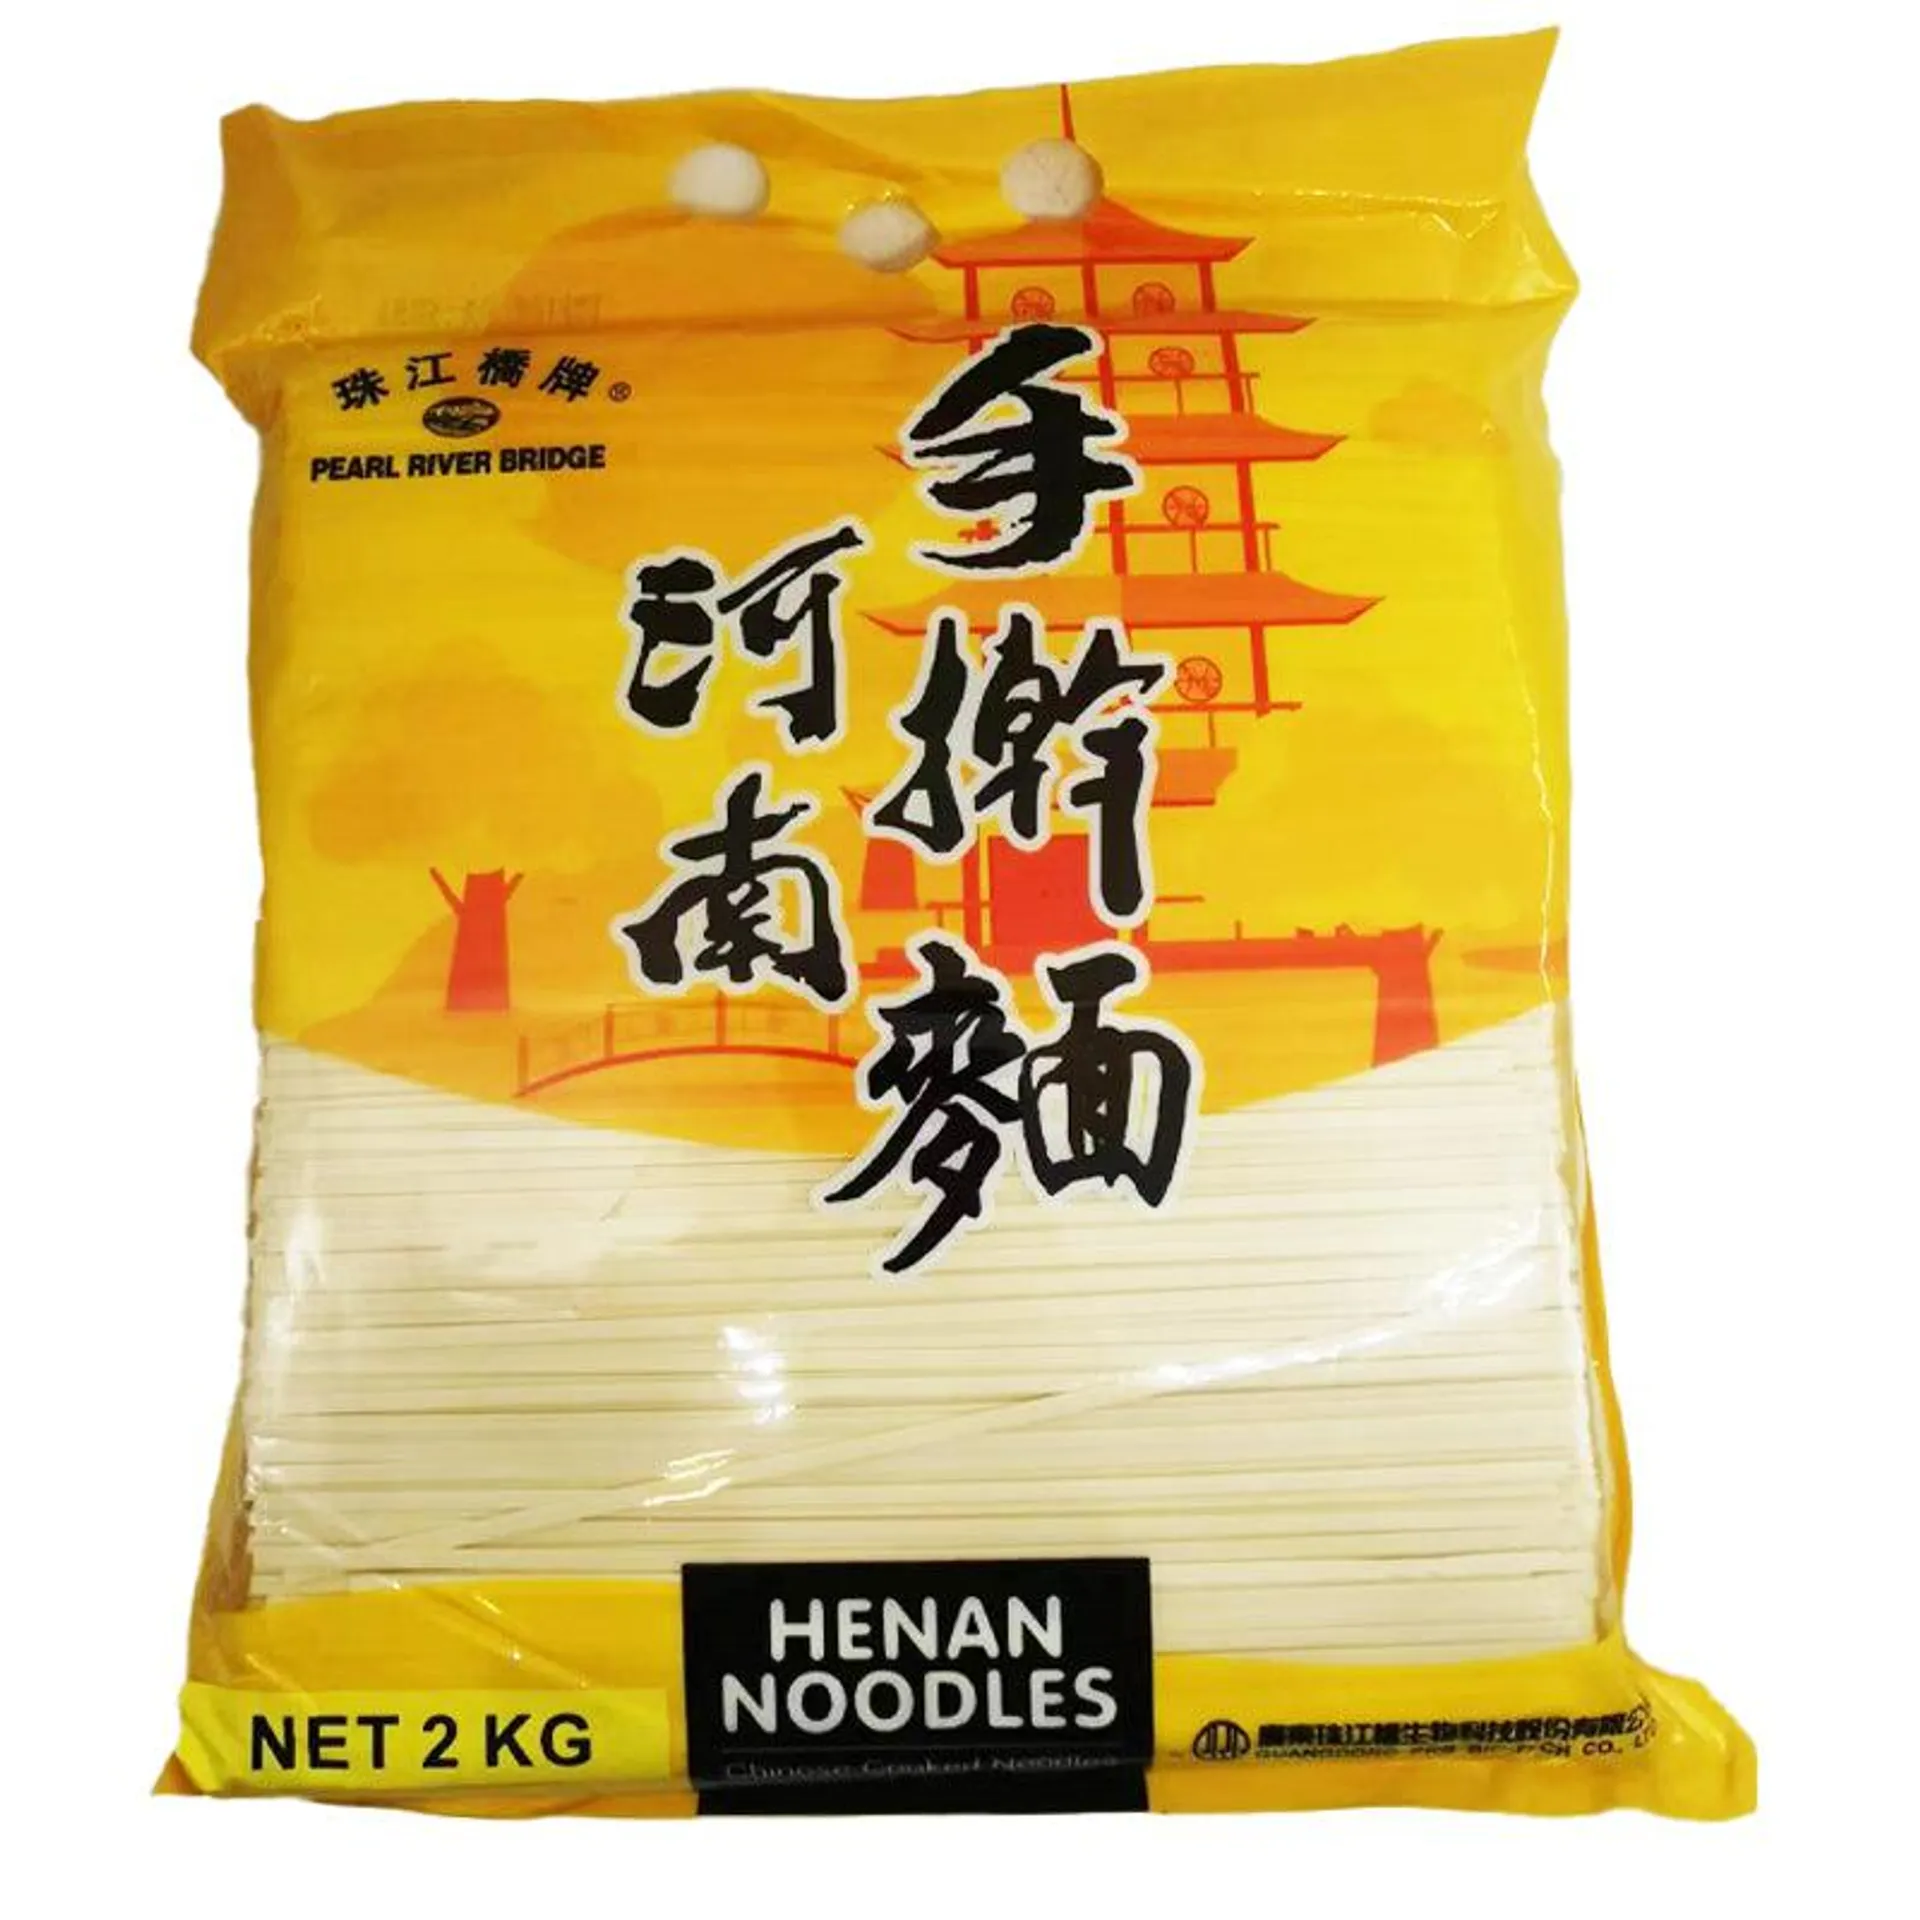 PRB Henan Noodles 2kg